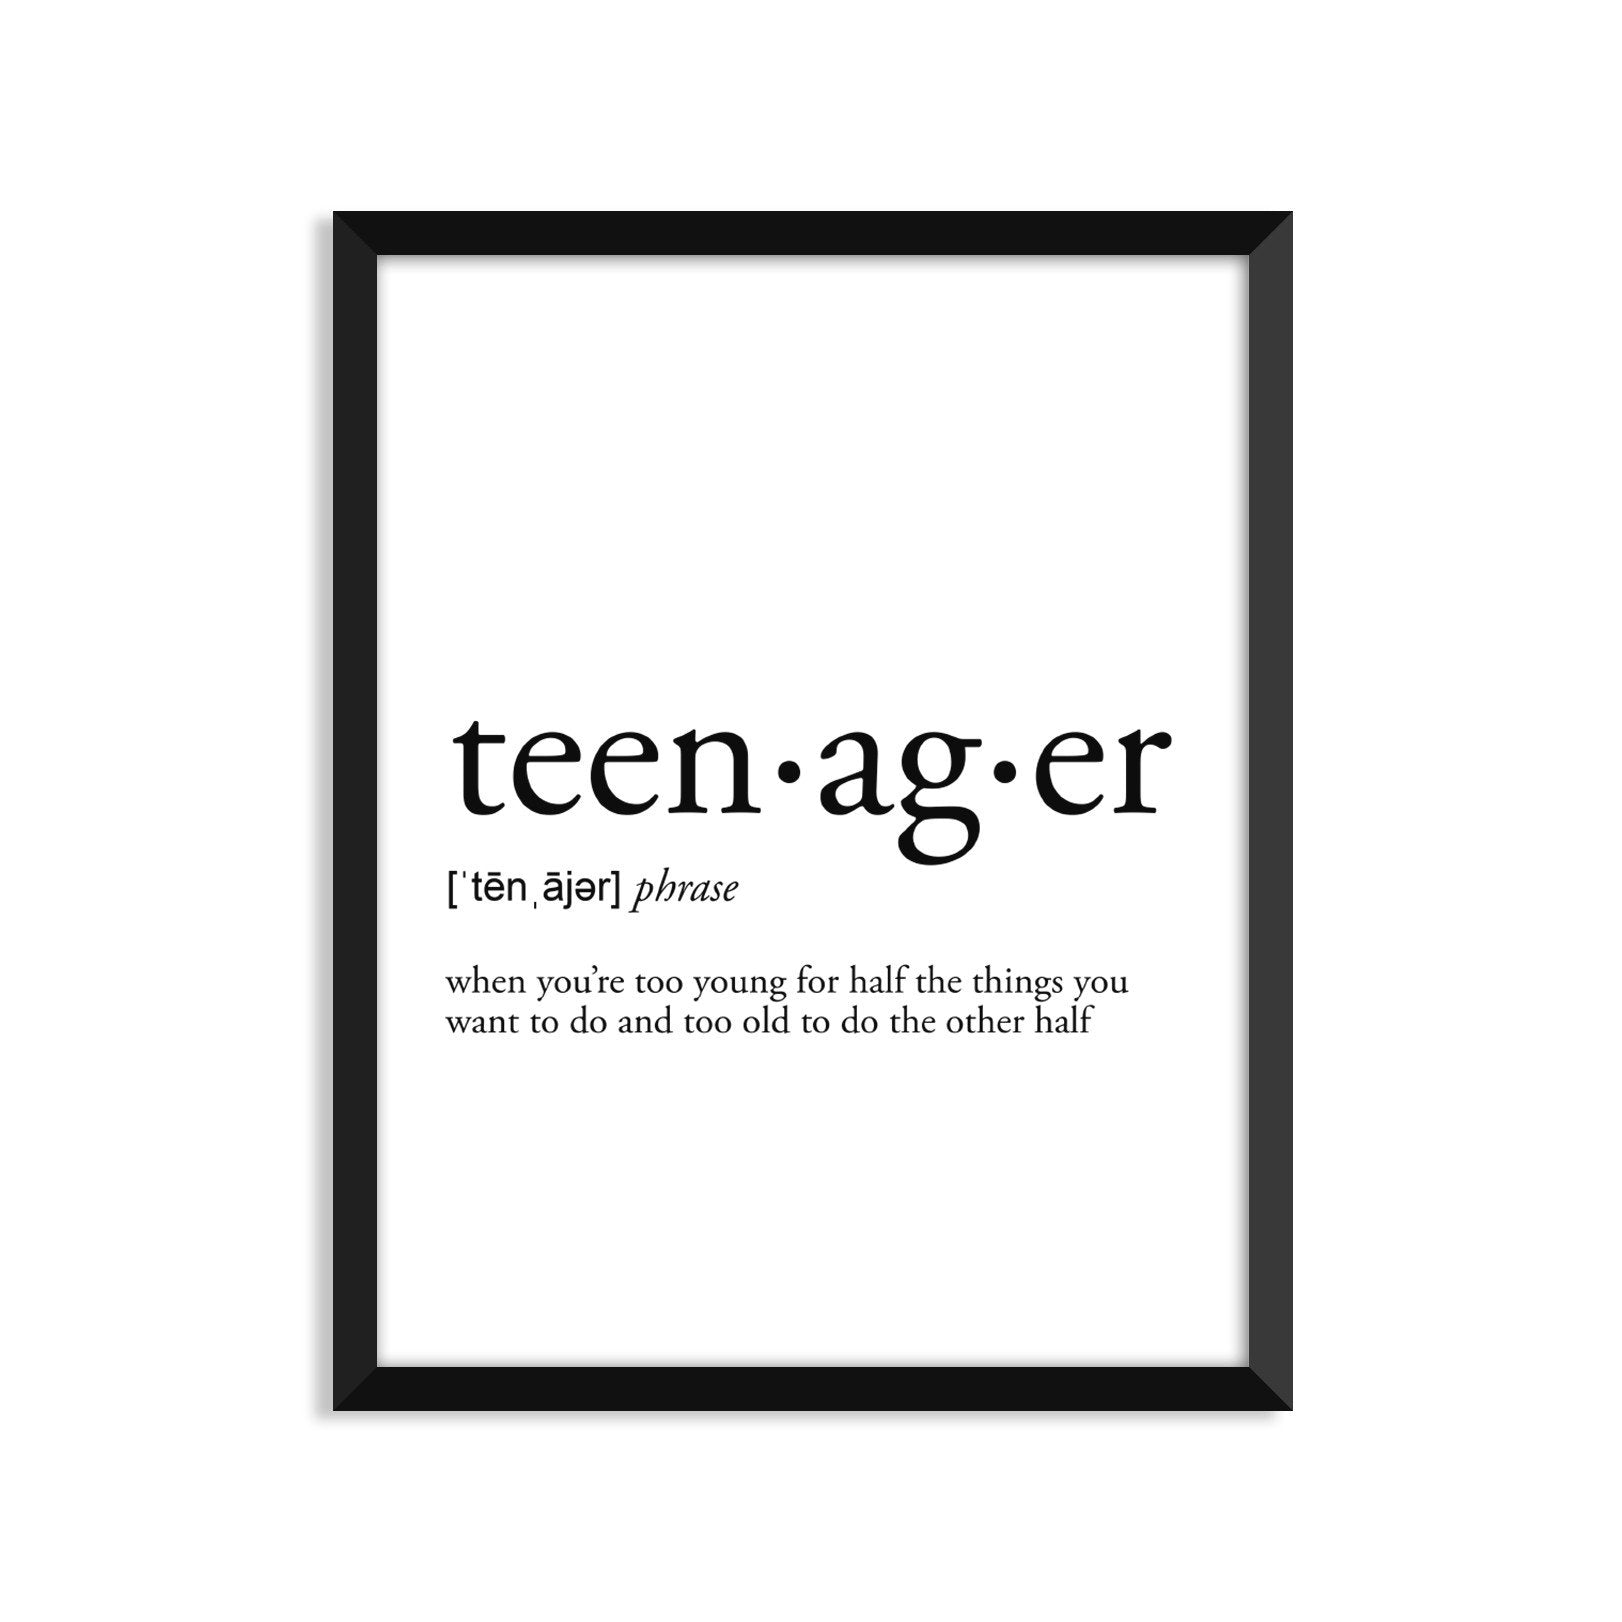 teenager noun greeting card